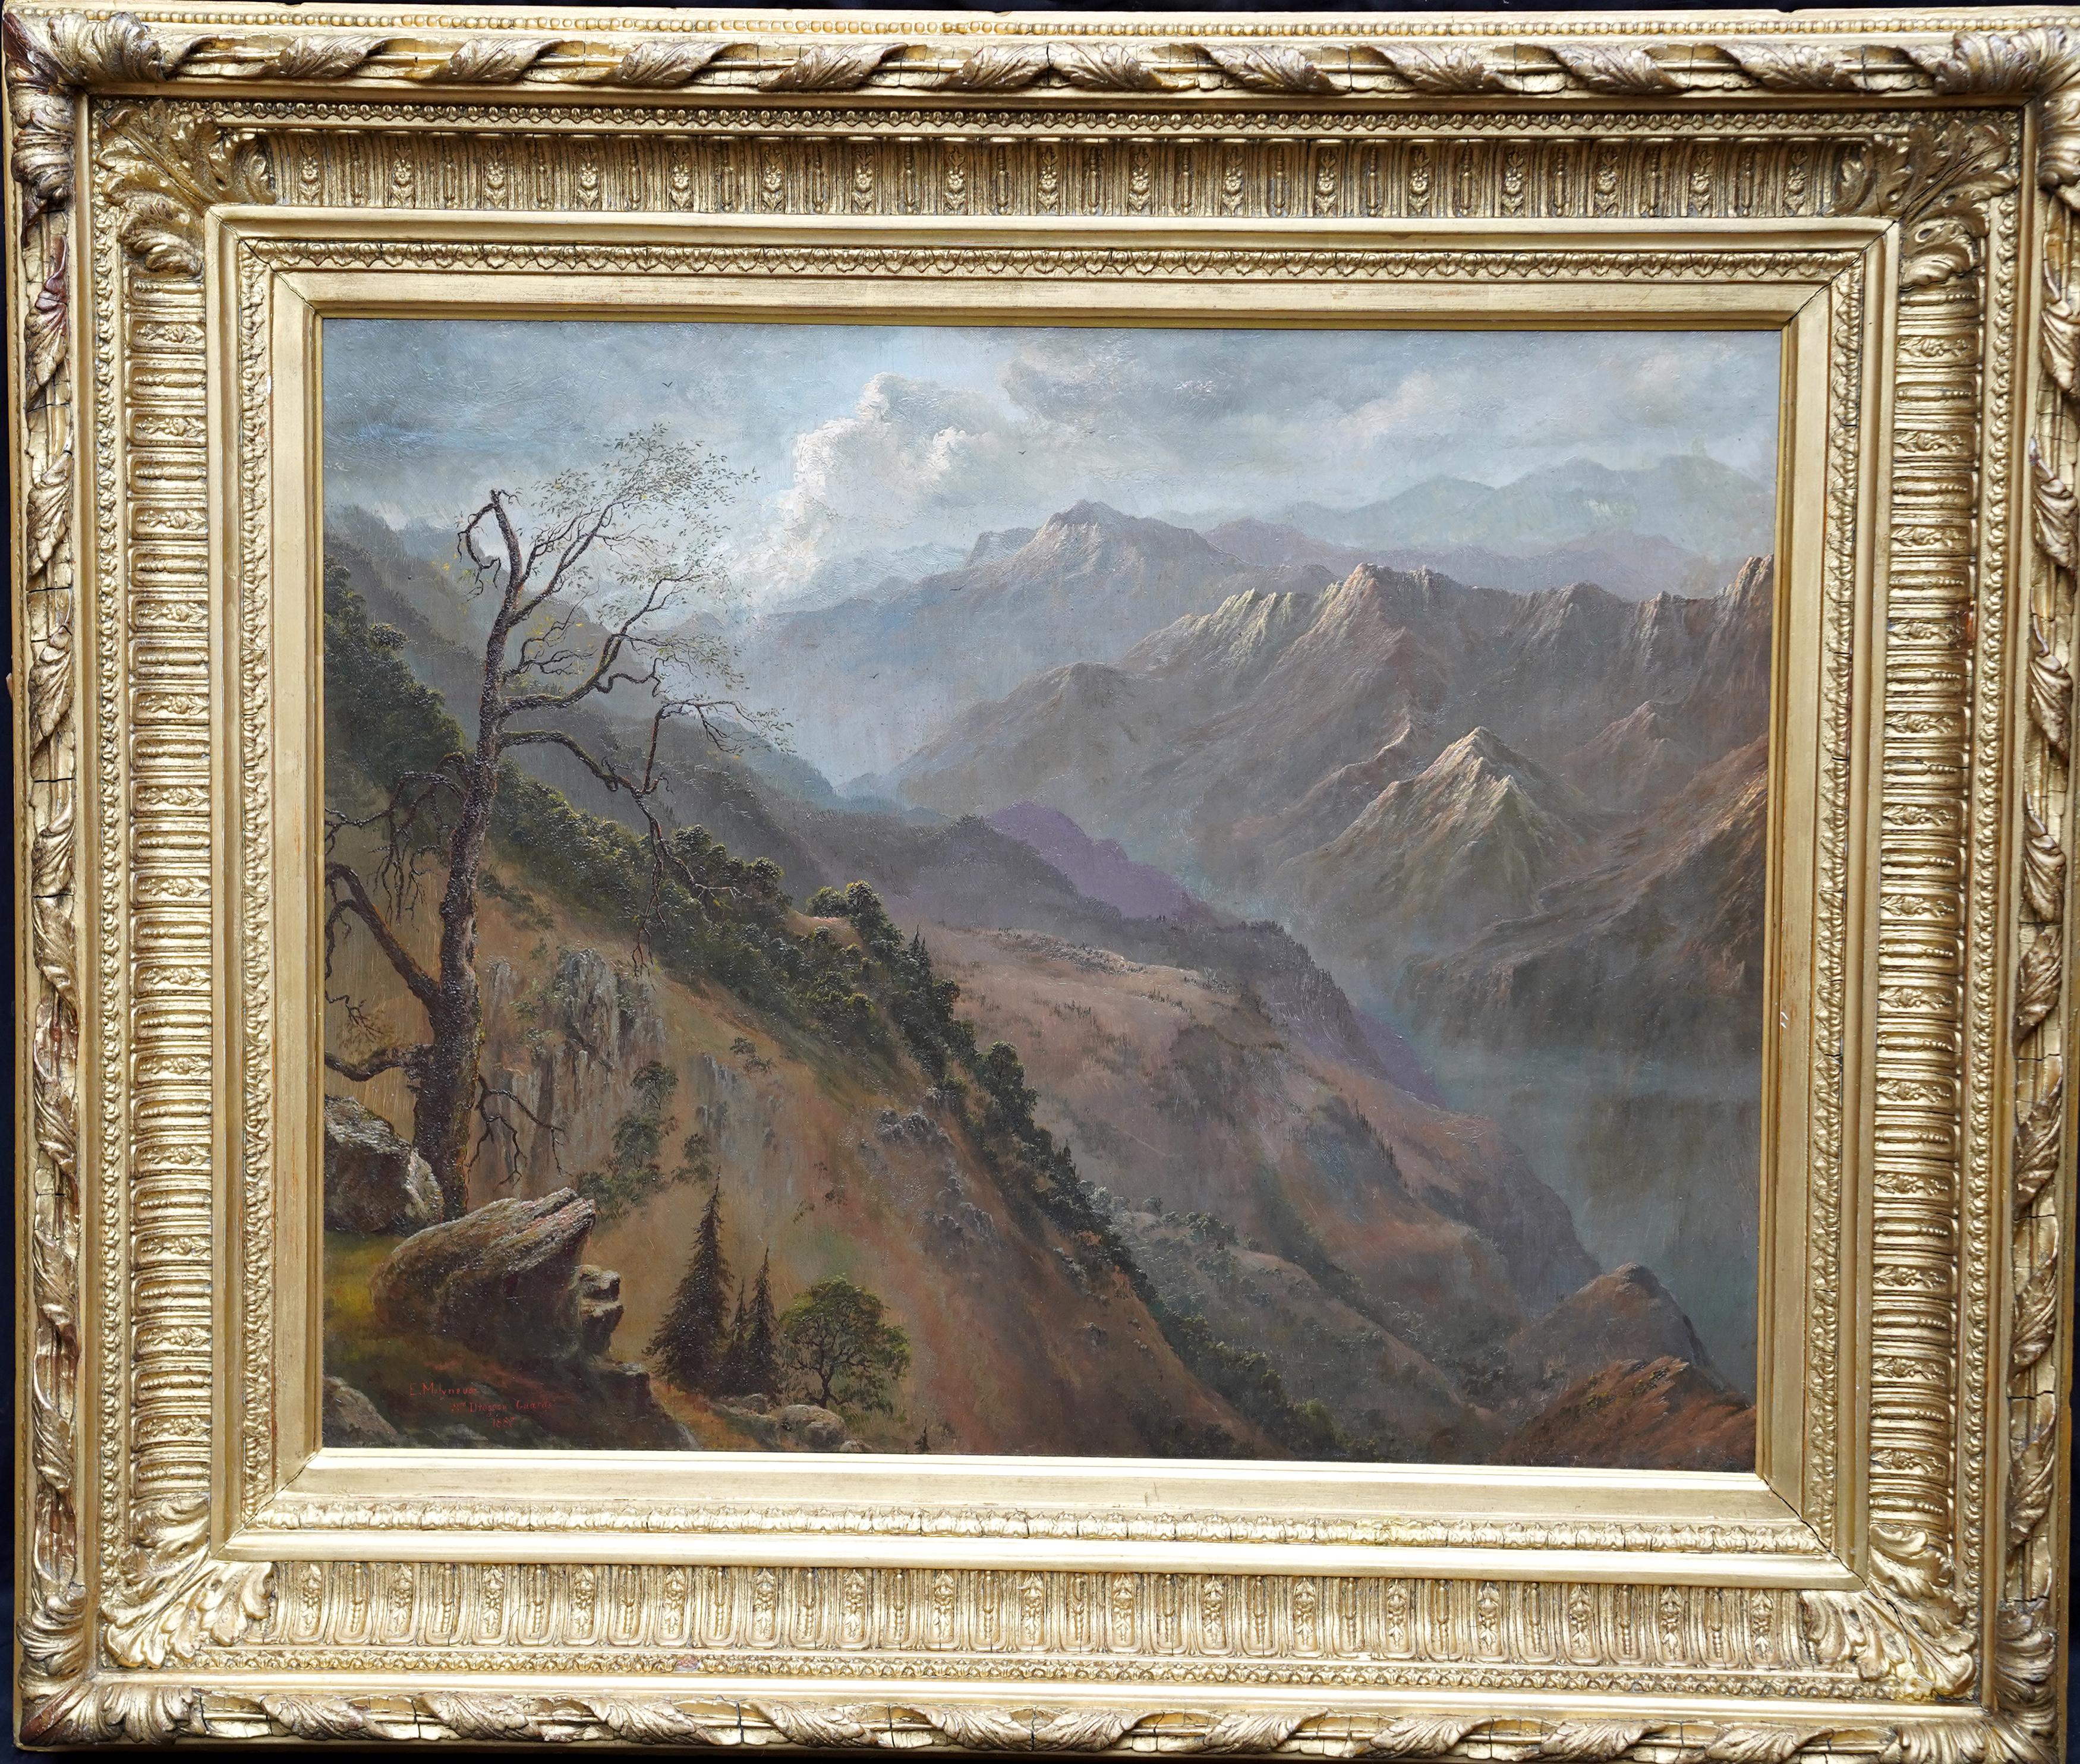 Edward Joseph Molyneux Landscape Painting - Chakata Landscape, India - British Victorian art 1887 landscape oil painting